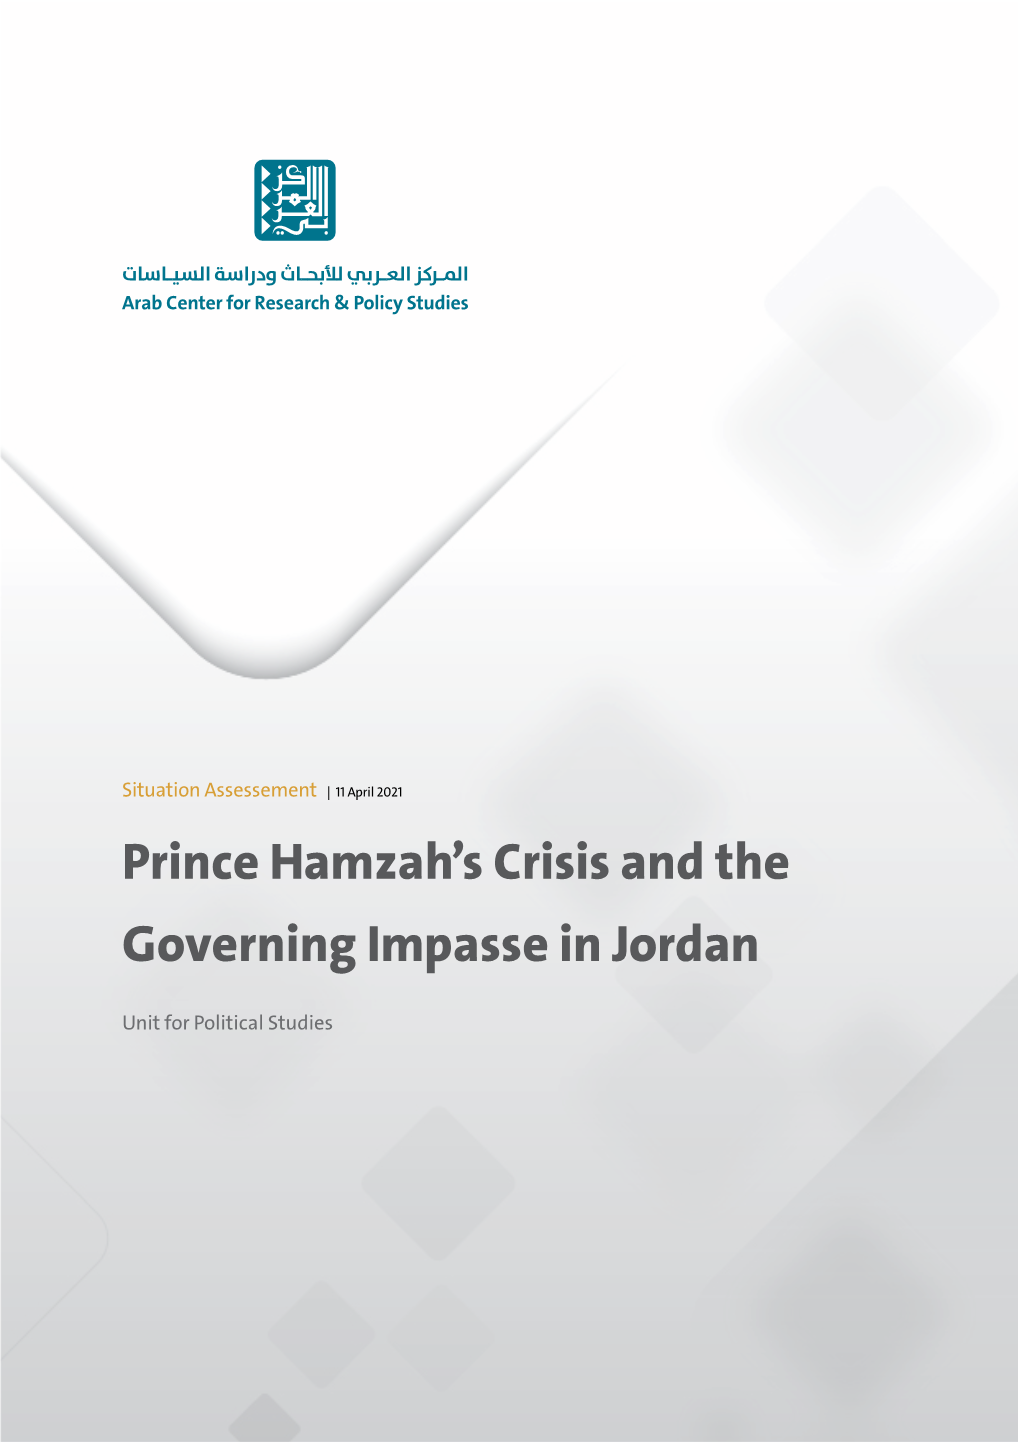 Prince Hamzah's Crisis and the Governing Impasse in Jordan